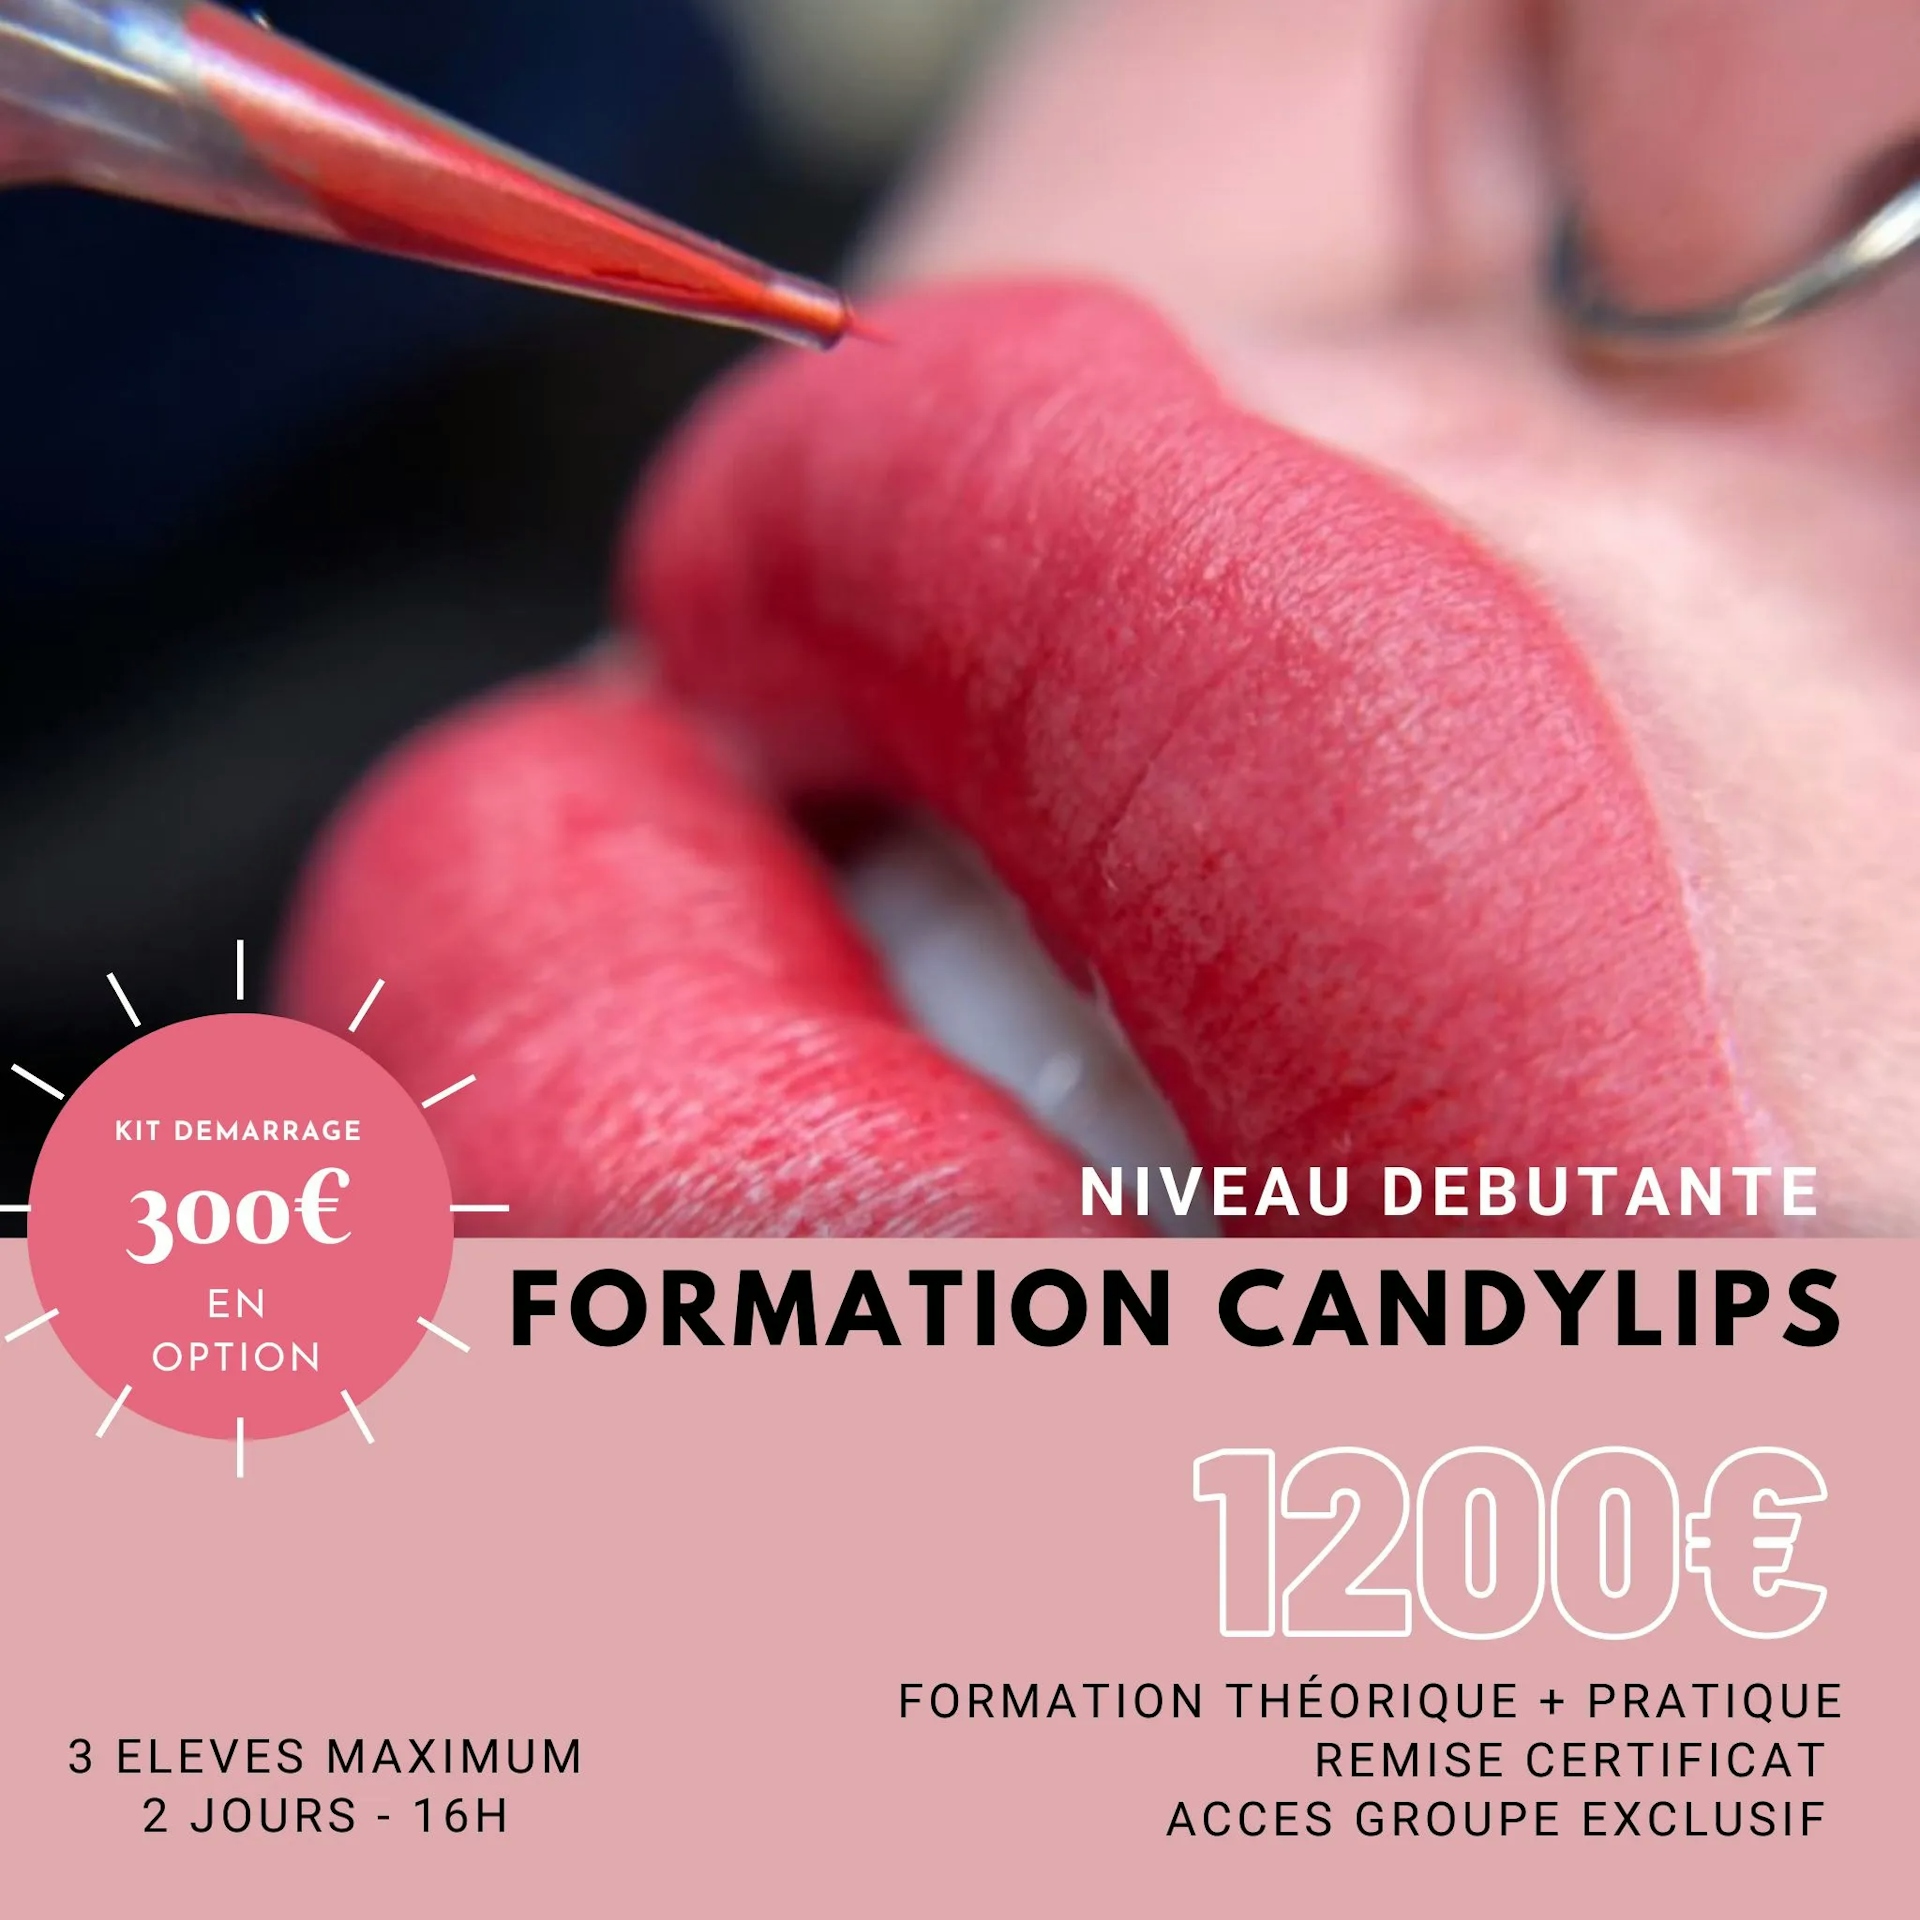 Informations de Formation Candy Lips à Dijon